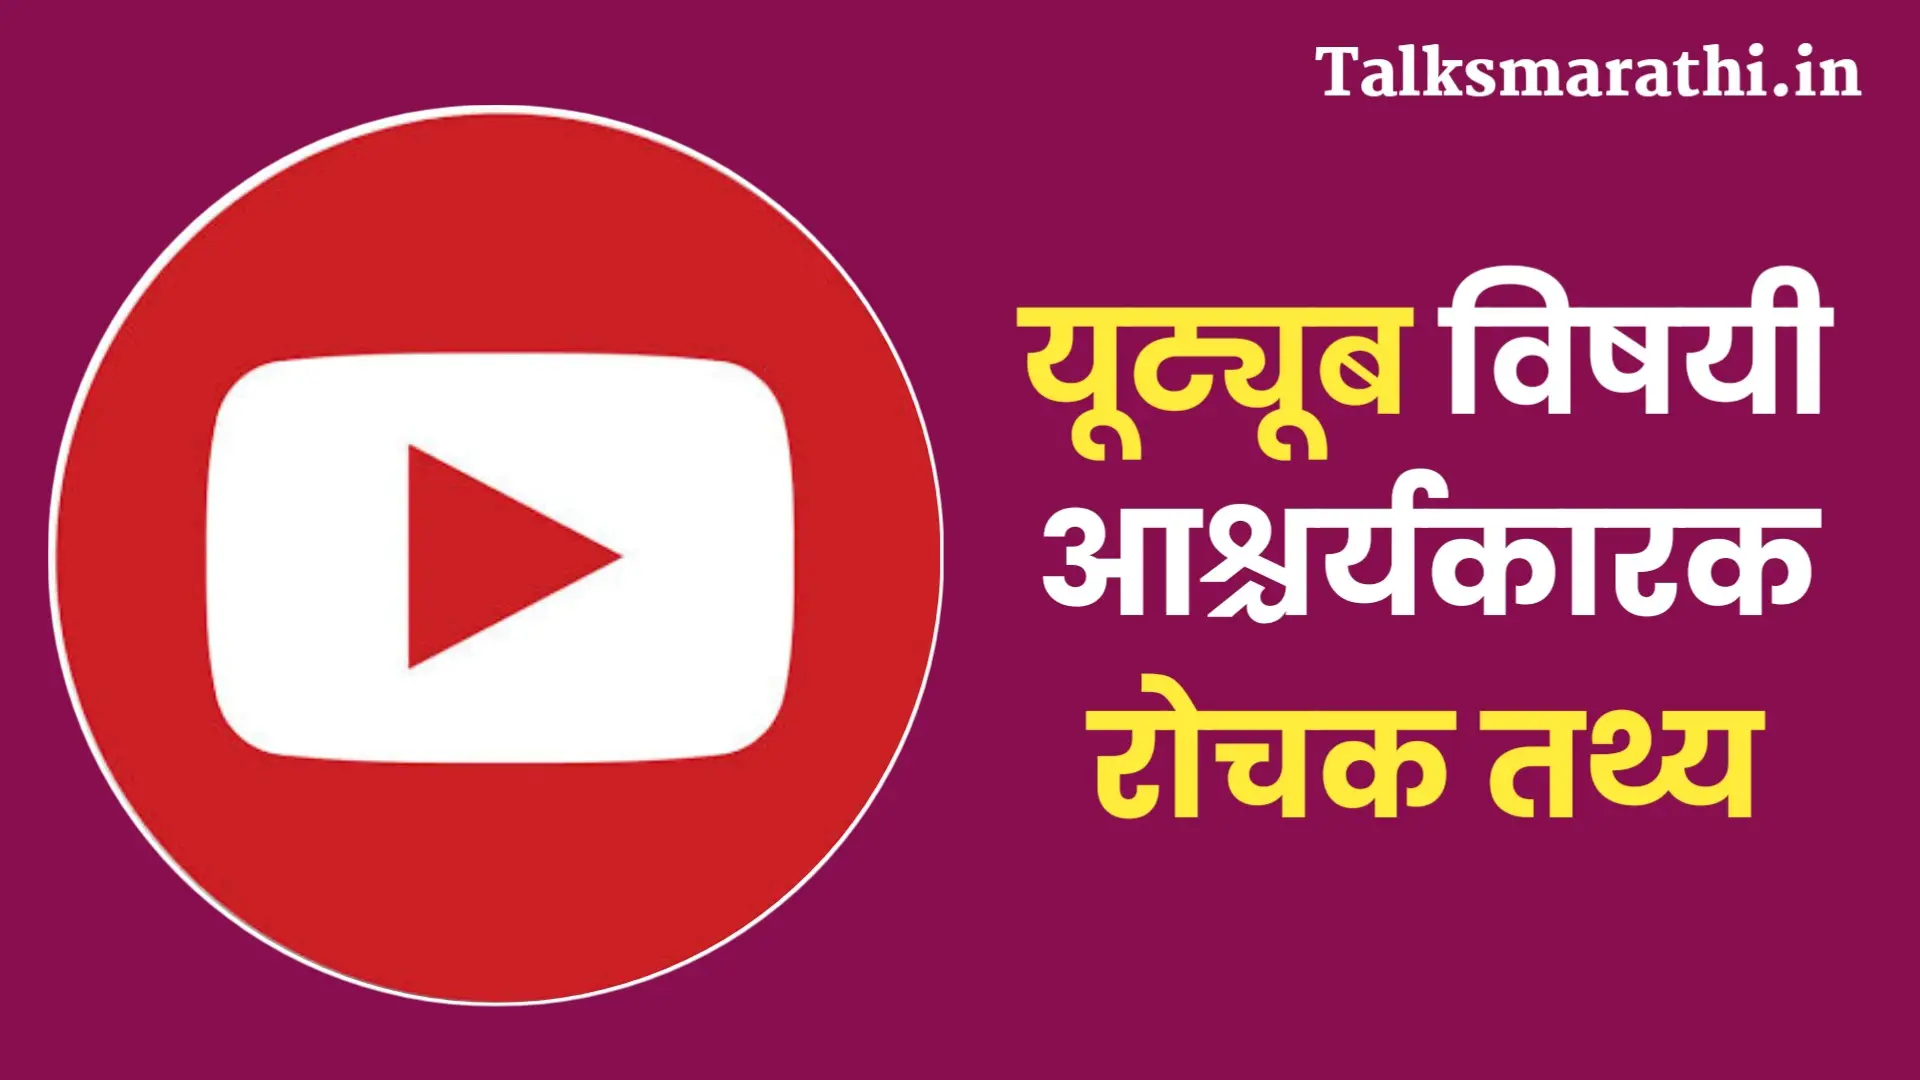 यूट्यूब विषयी 20 रोचक तथ्य | Amazing facts about youtube in marathi